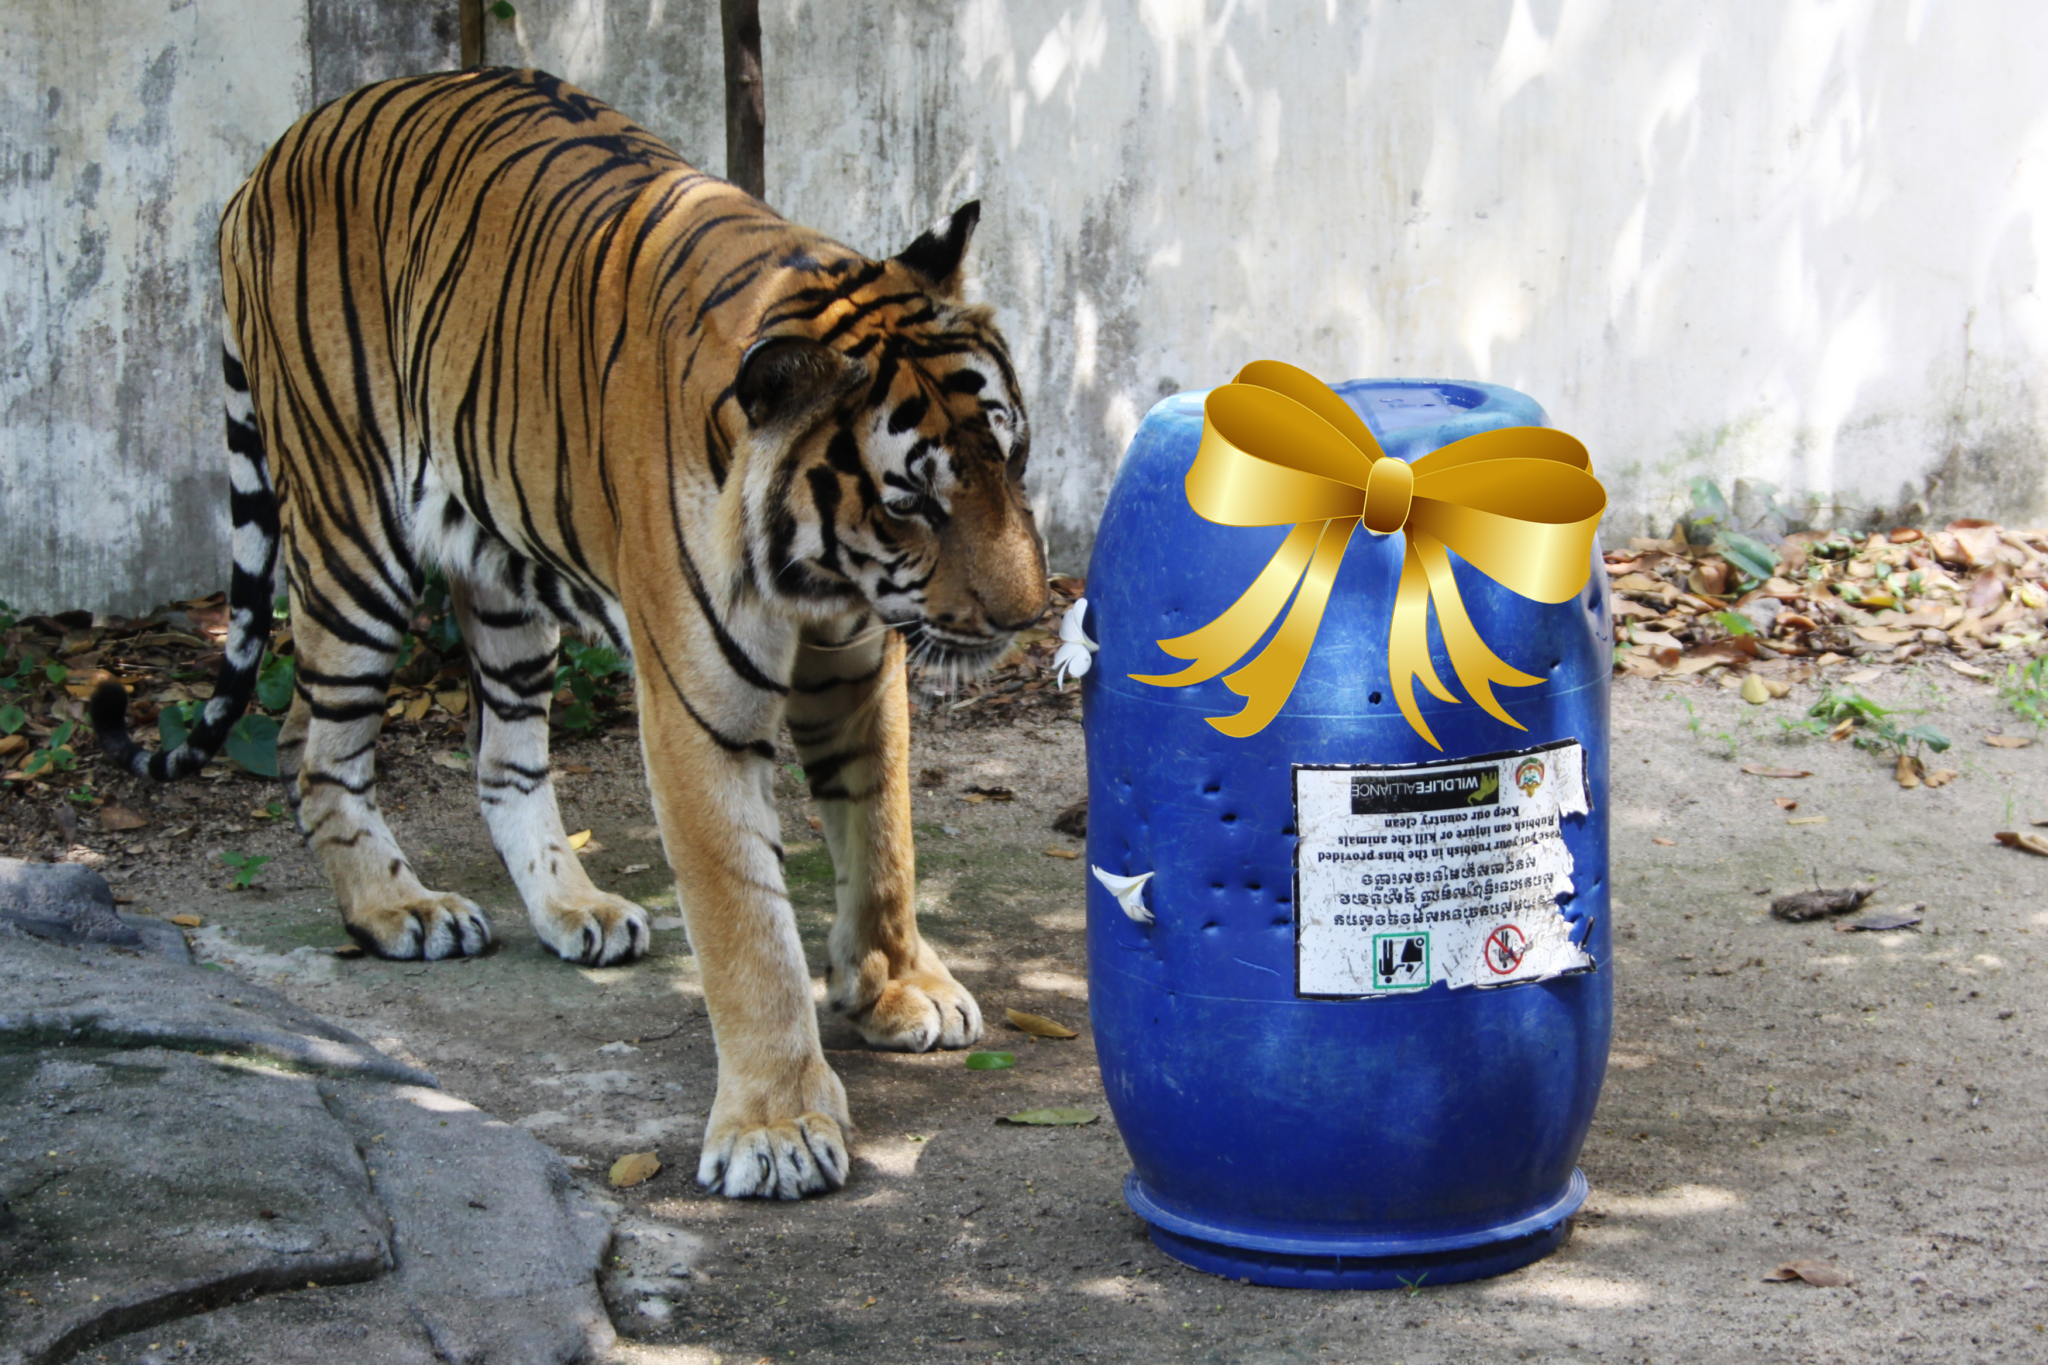 Tiger with barrel enrichment Wildlife Alliance Cambodia Phnom Tamao Wildlife Rescue Centre git bow Mother's Day 2021